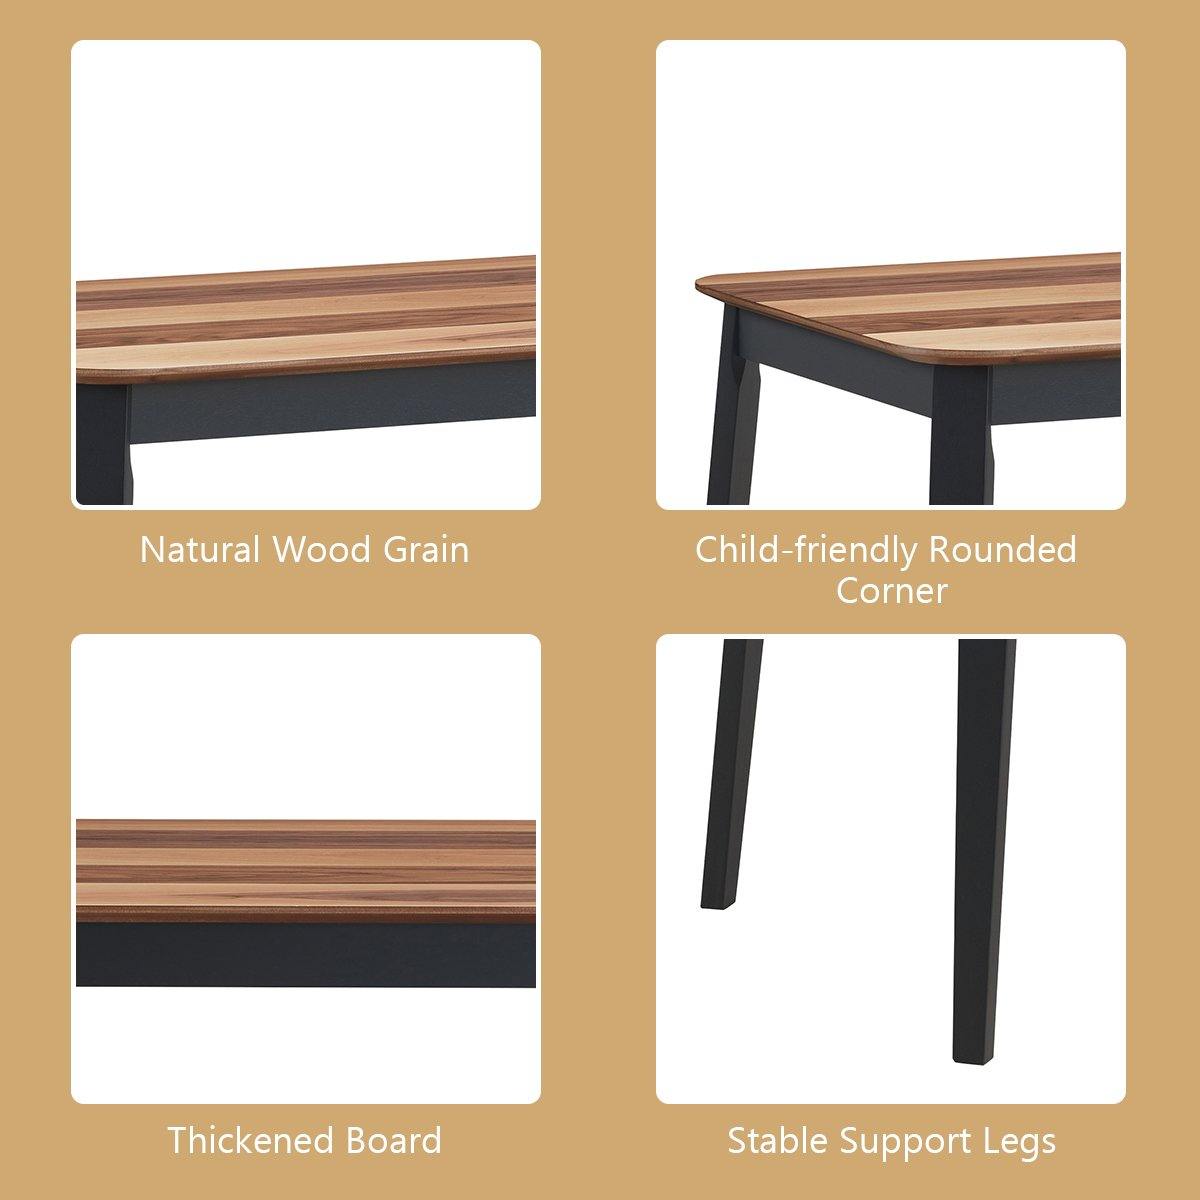 Wood Dining Table, Rectangular Kitchen Table (Walnut & Black) - Giantexus